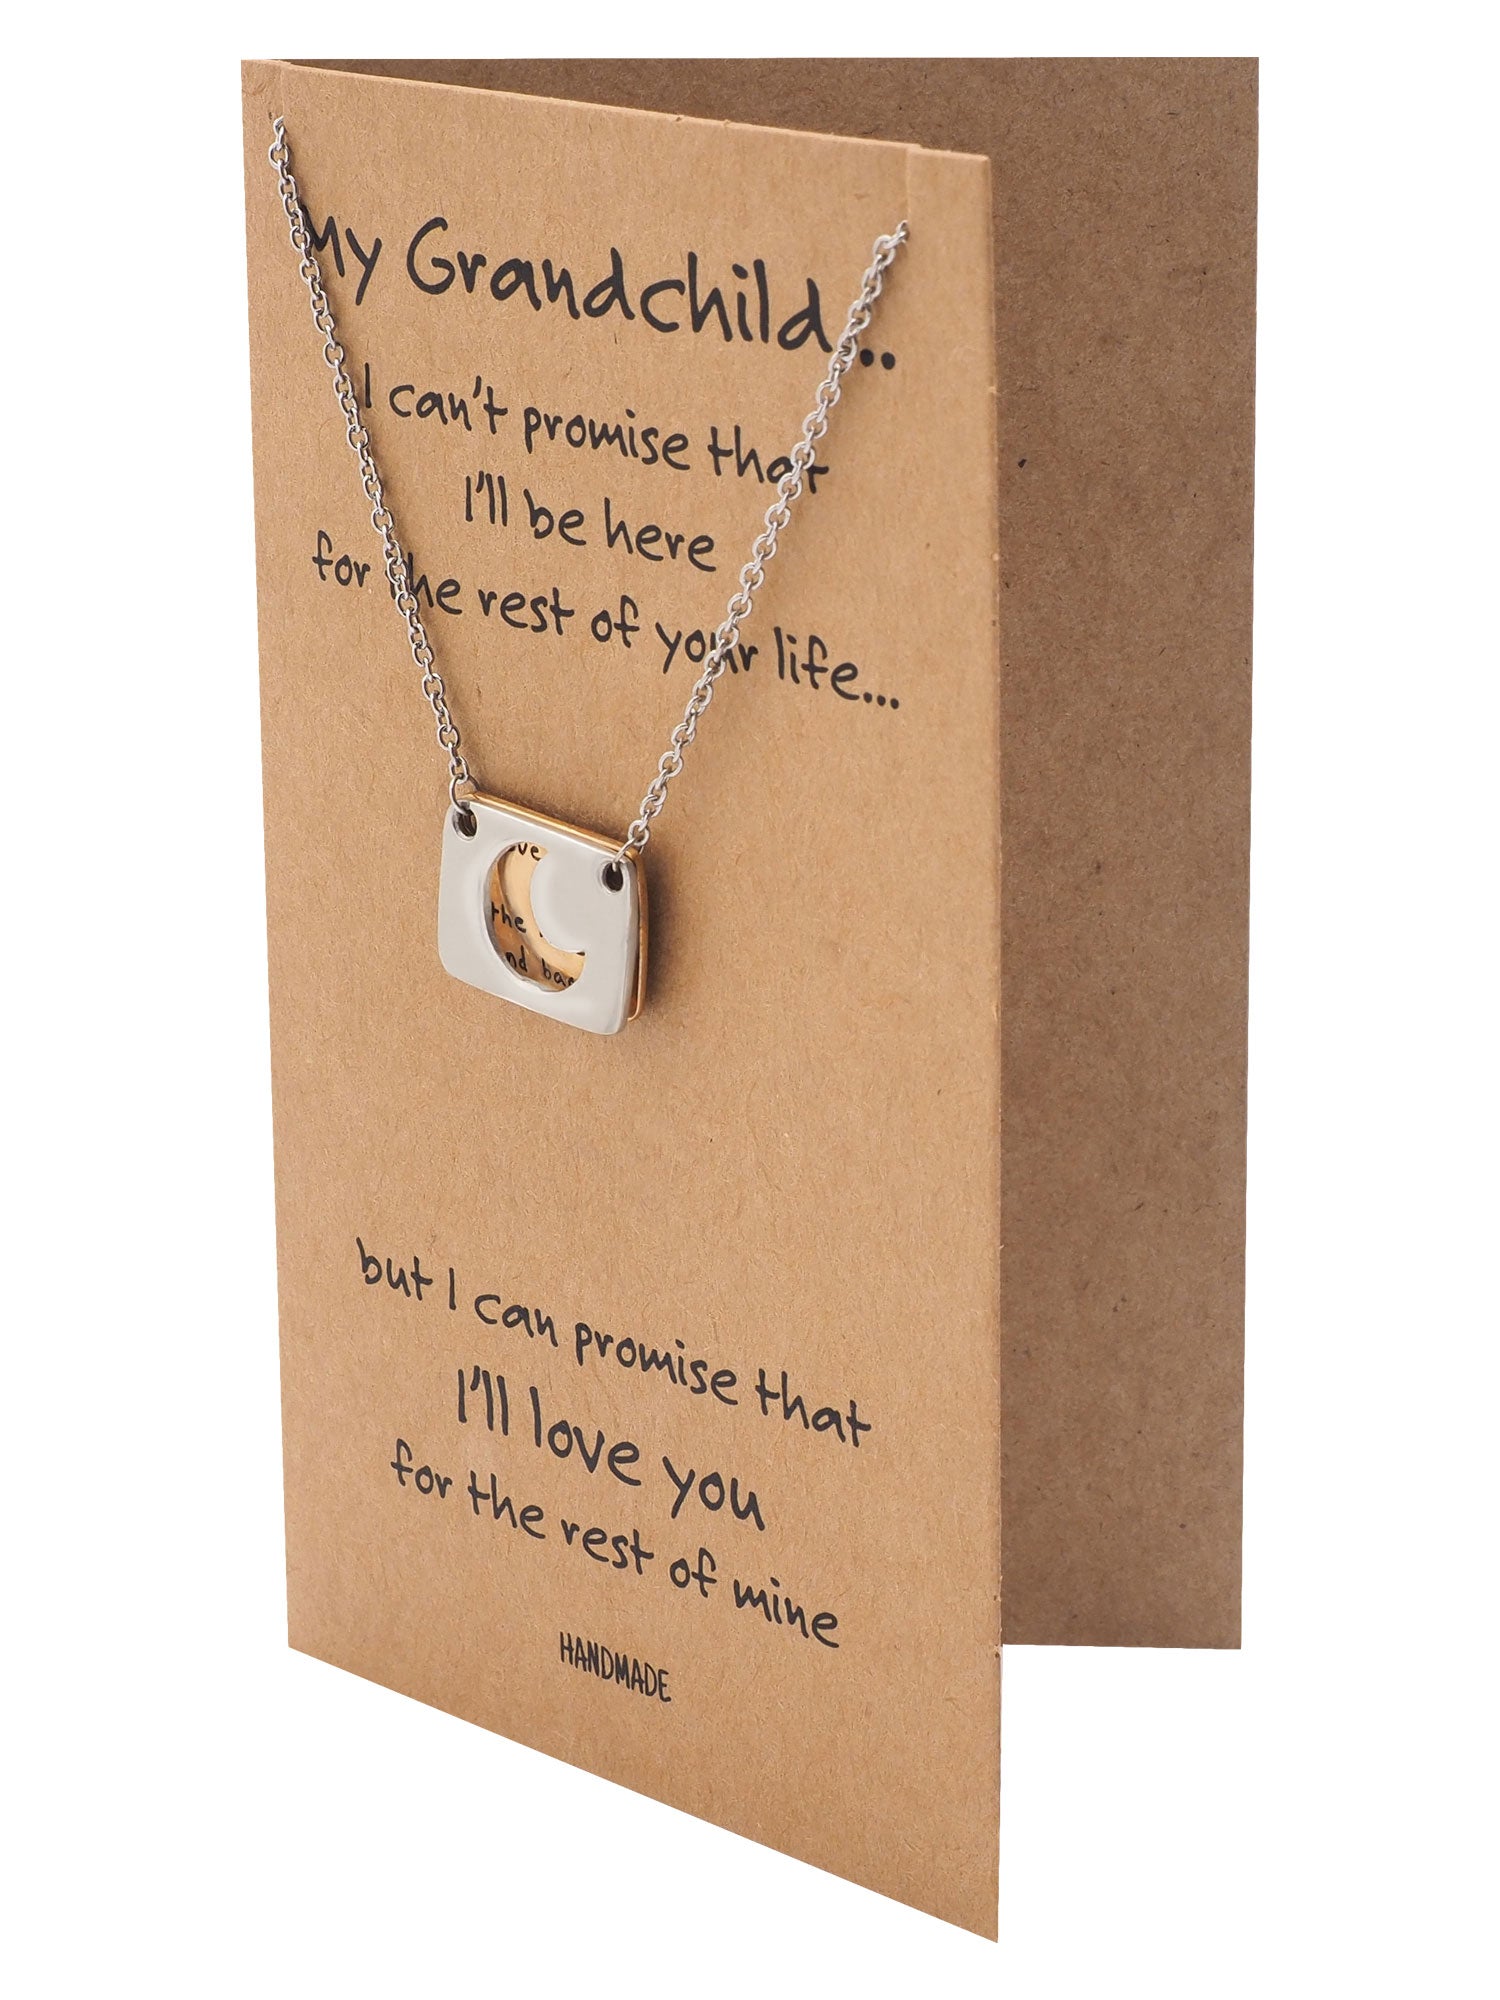 Unique Granddaughter Necklaces - Personalized & Memorable